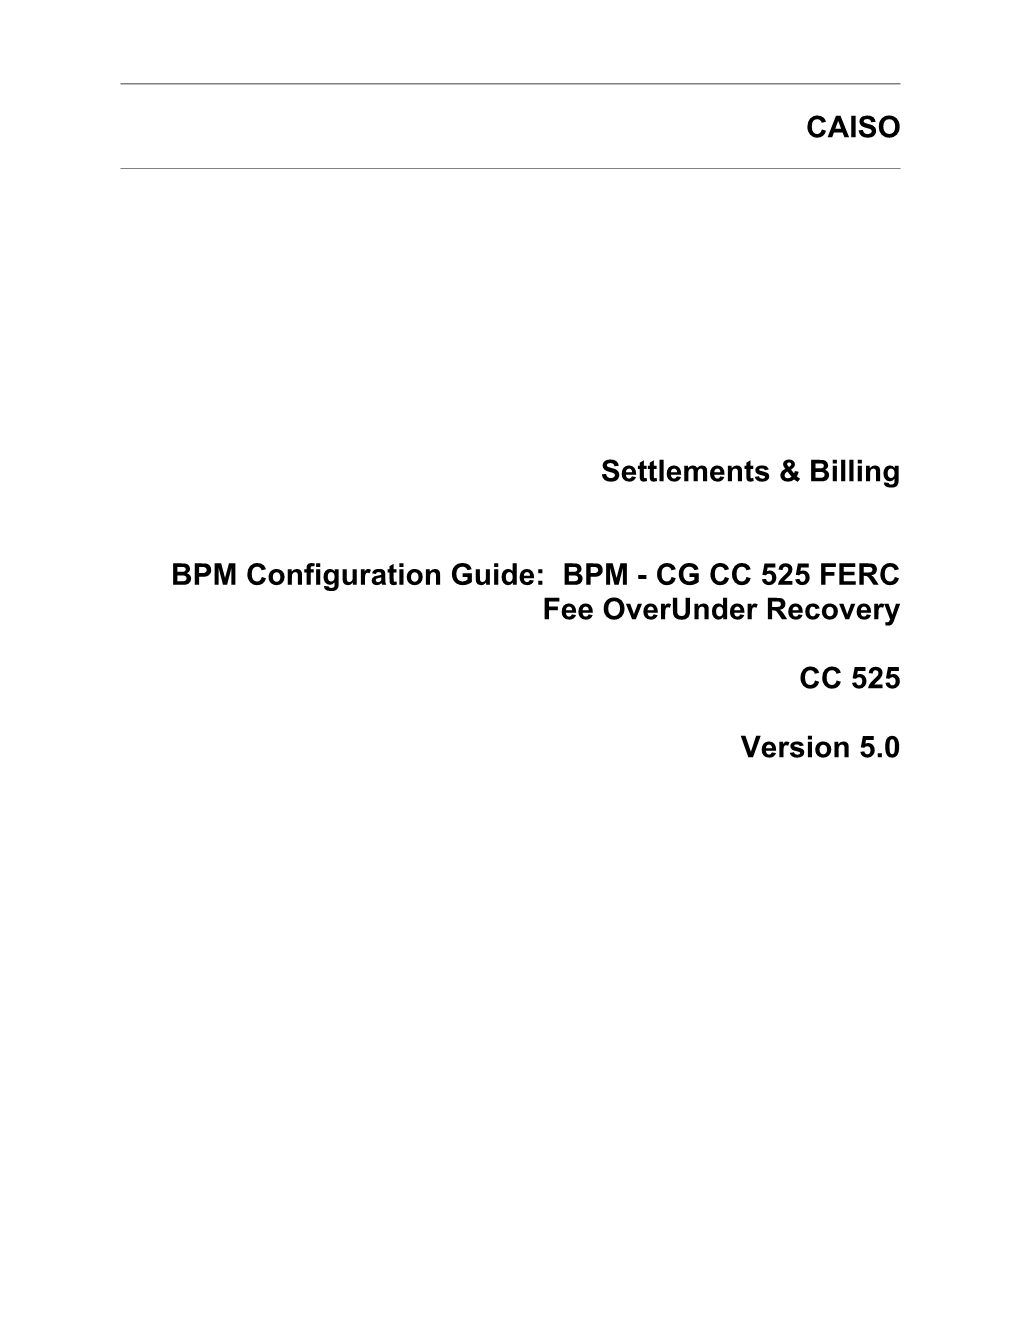 BPM - CG CC 525 FERC Fee Overunder Recovery